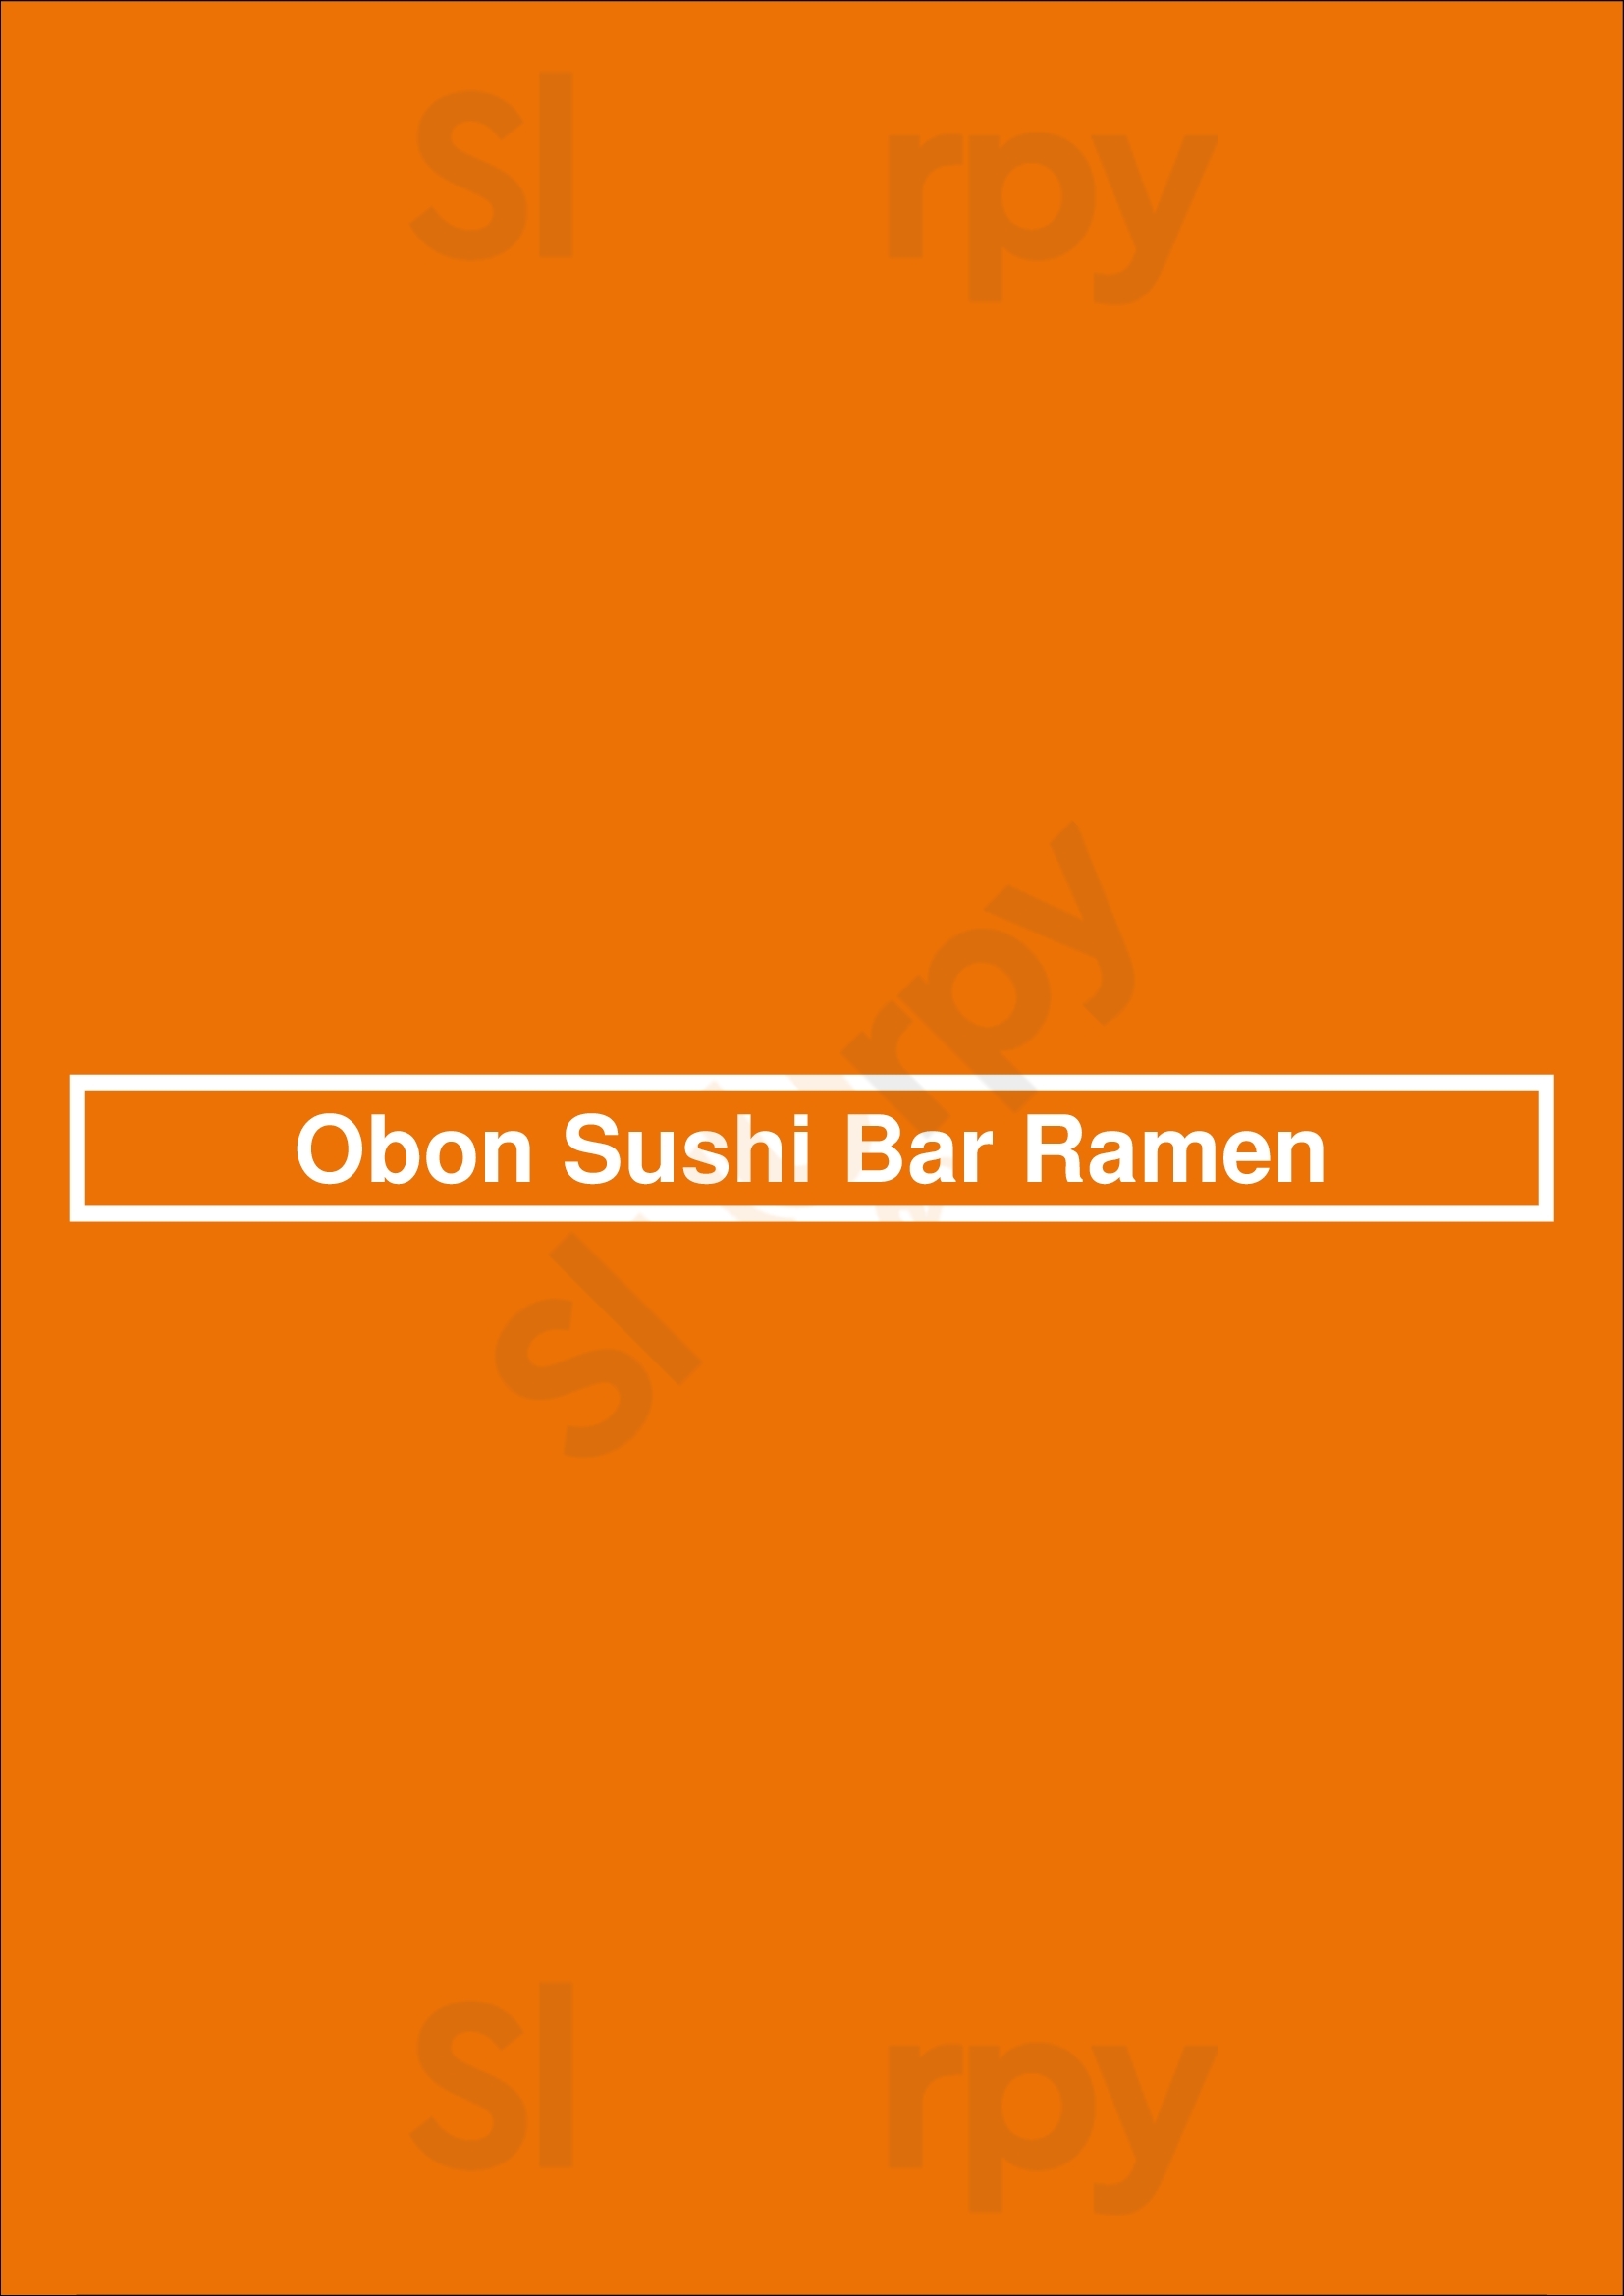 Obon Sushi Bar Ramen Tucson Menu - 1